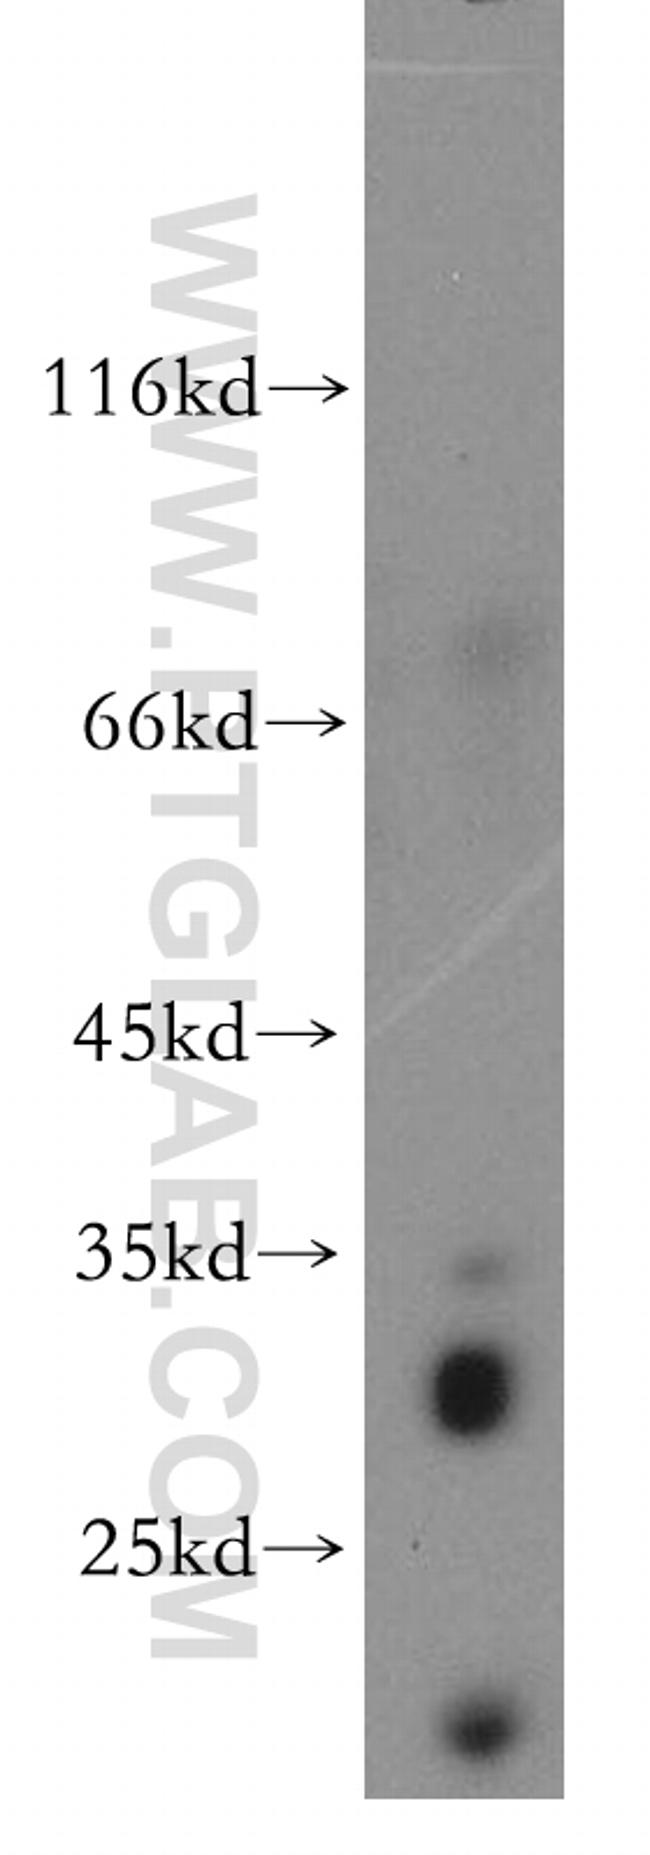 CD80/B7-1 Antibody in Western Blot (WB)